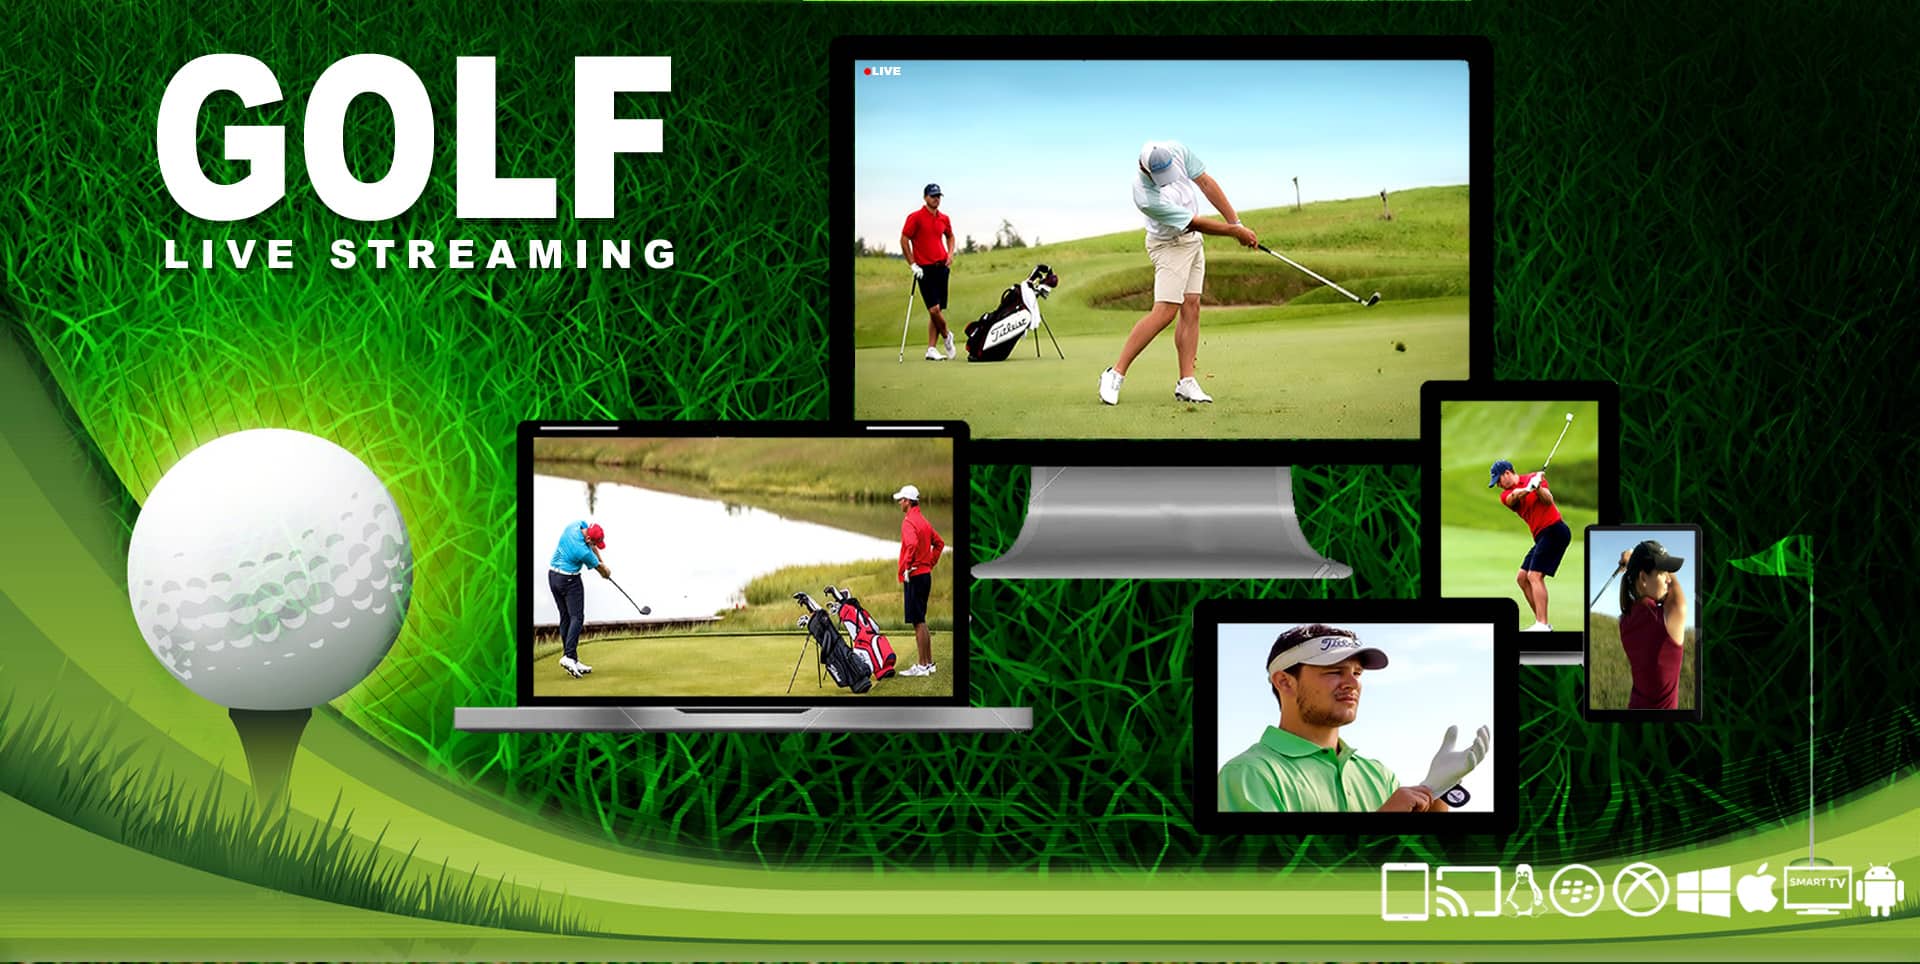 Live Golf in Dubai Championship, Third Round Streaming Online Link 2